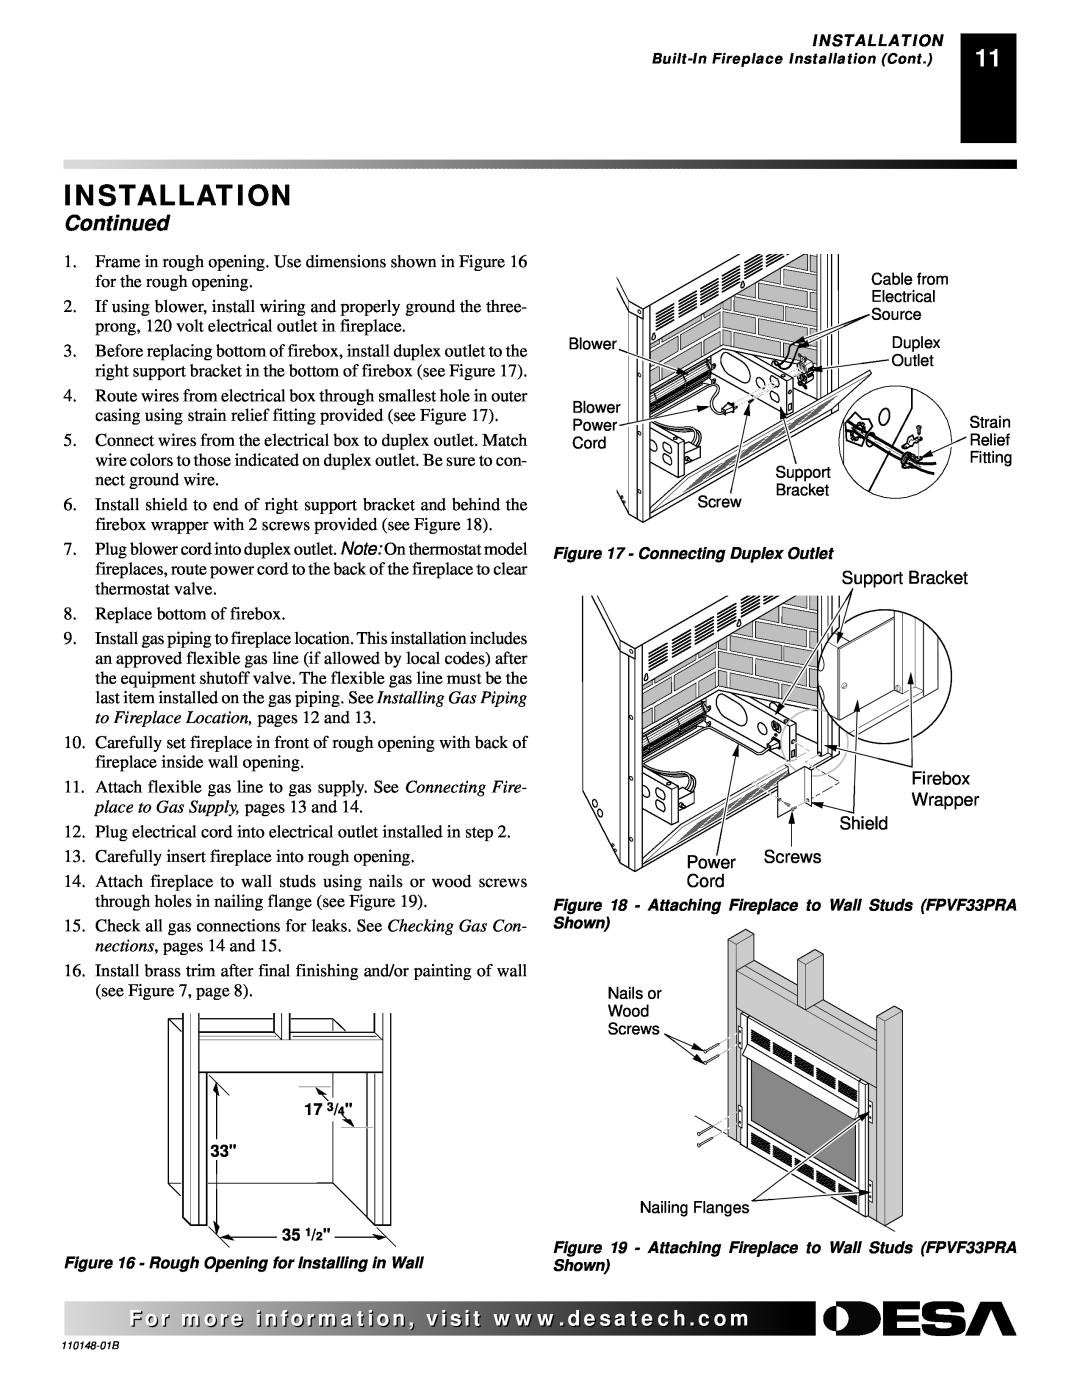 Desa FPVF33NRA, YGF33PRB installation manual Installation, Continued, Replace bottom of firebox 